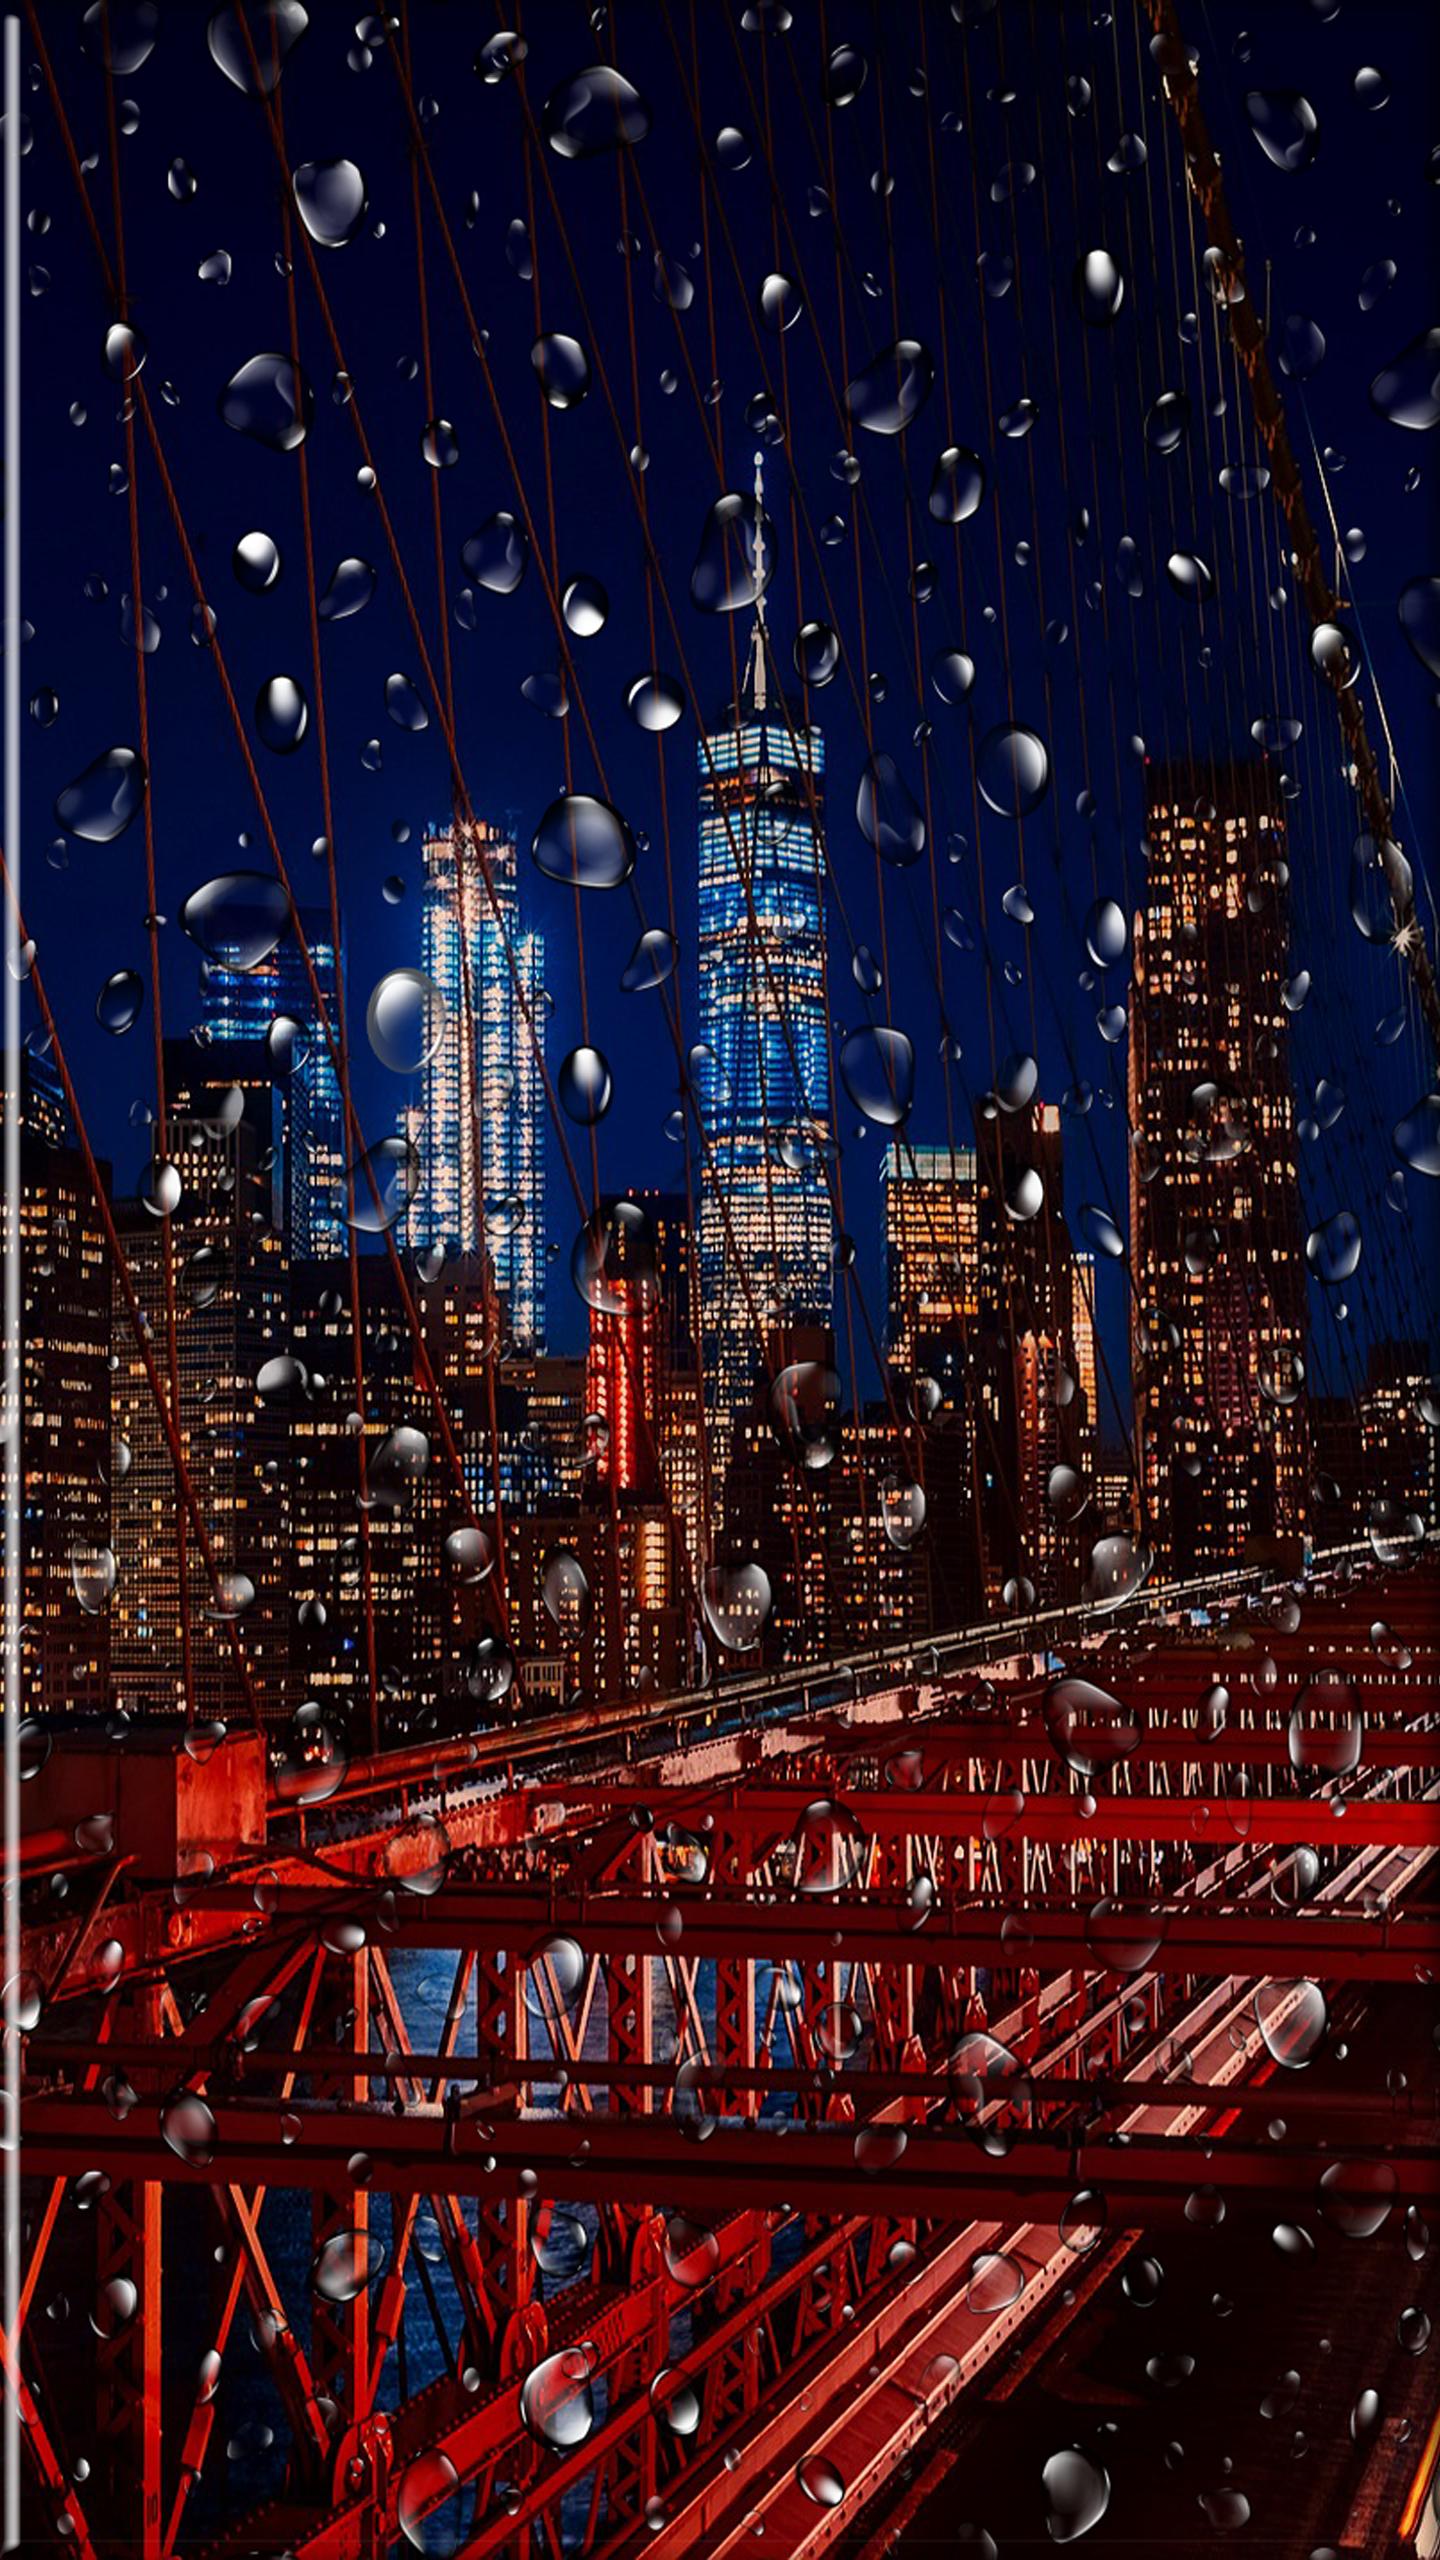 City Rain Wallpapers 4k Hd City Rain Backgrounds On Wallpaperbat